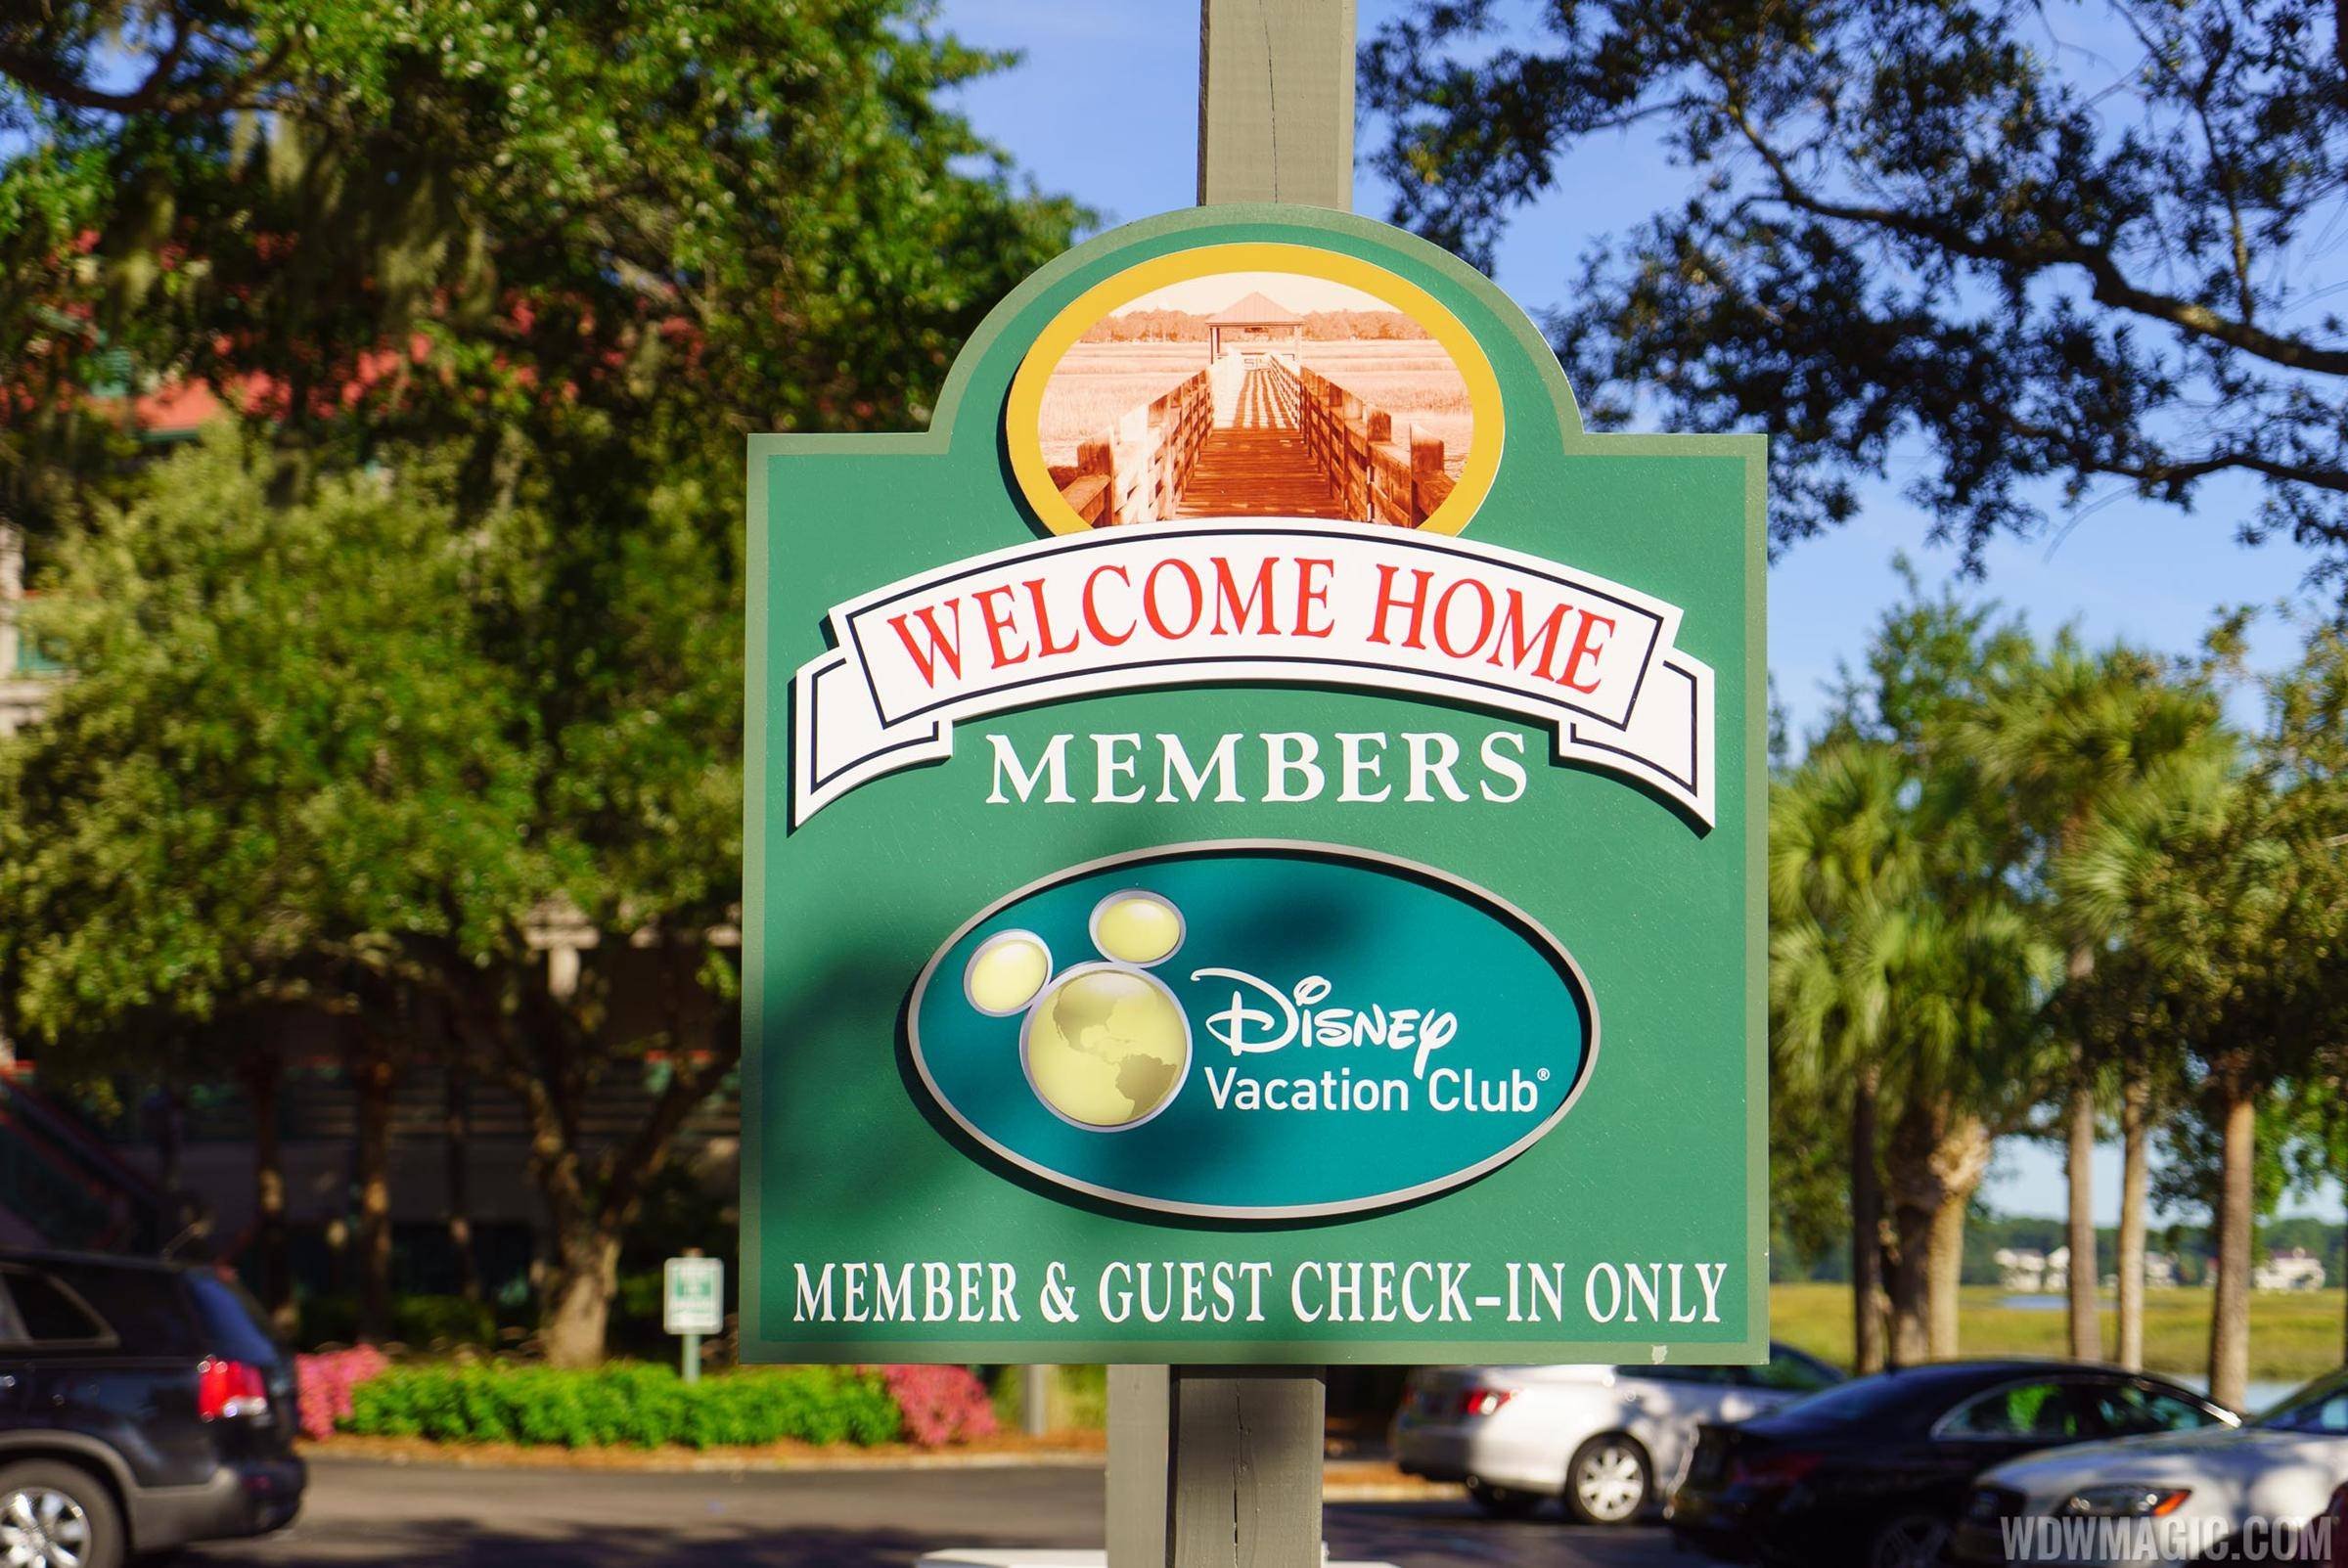 Disney Vacation Club coming to the Animal Kingdom Lodge